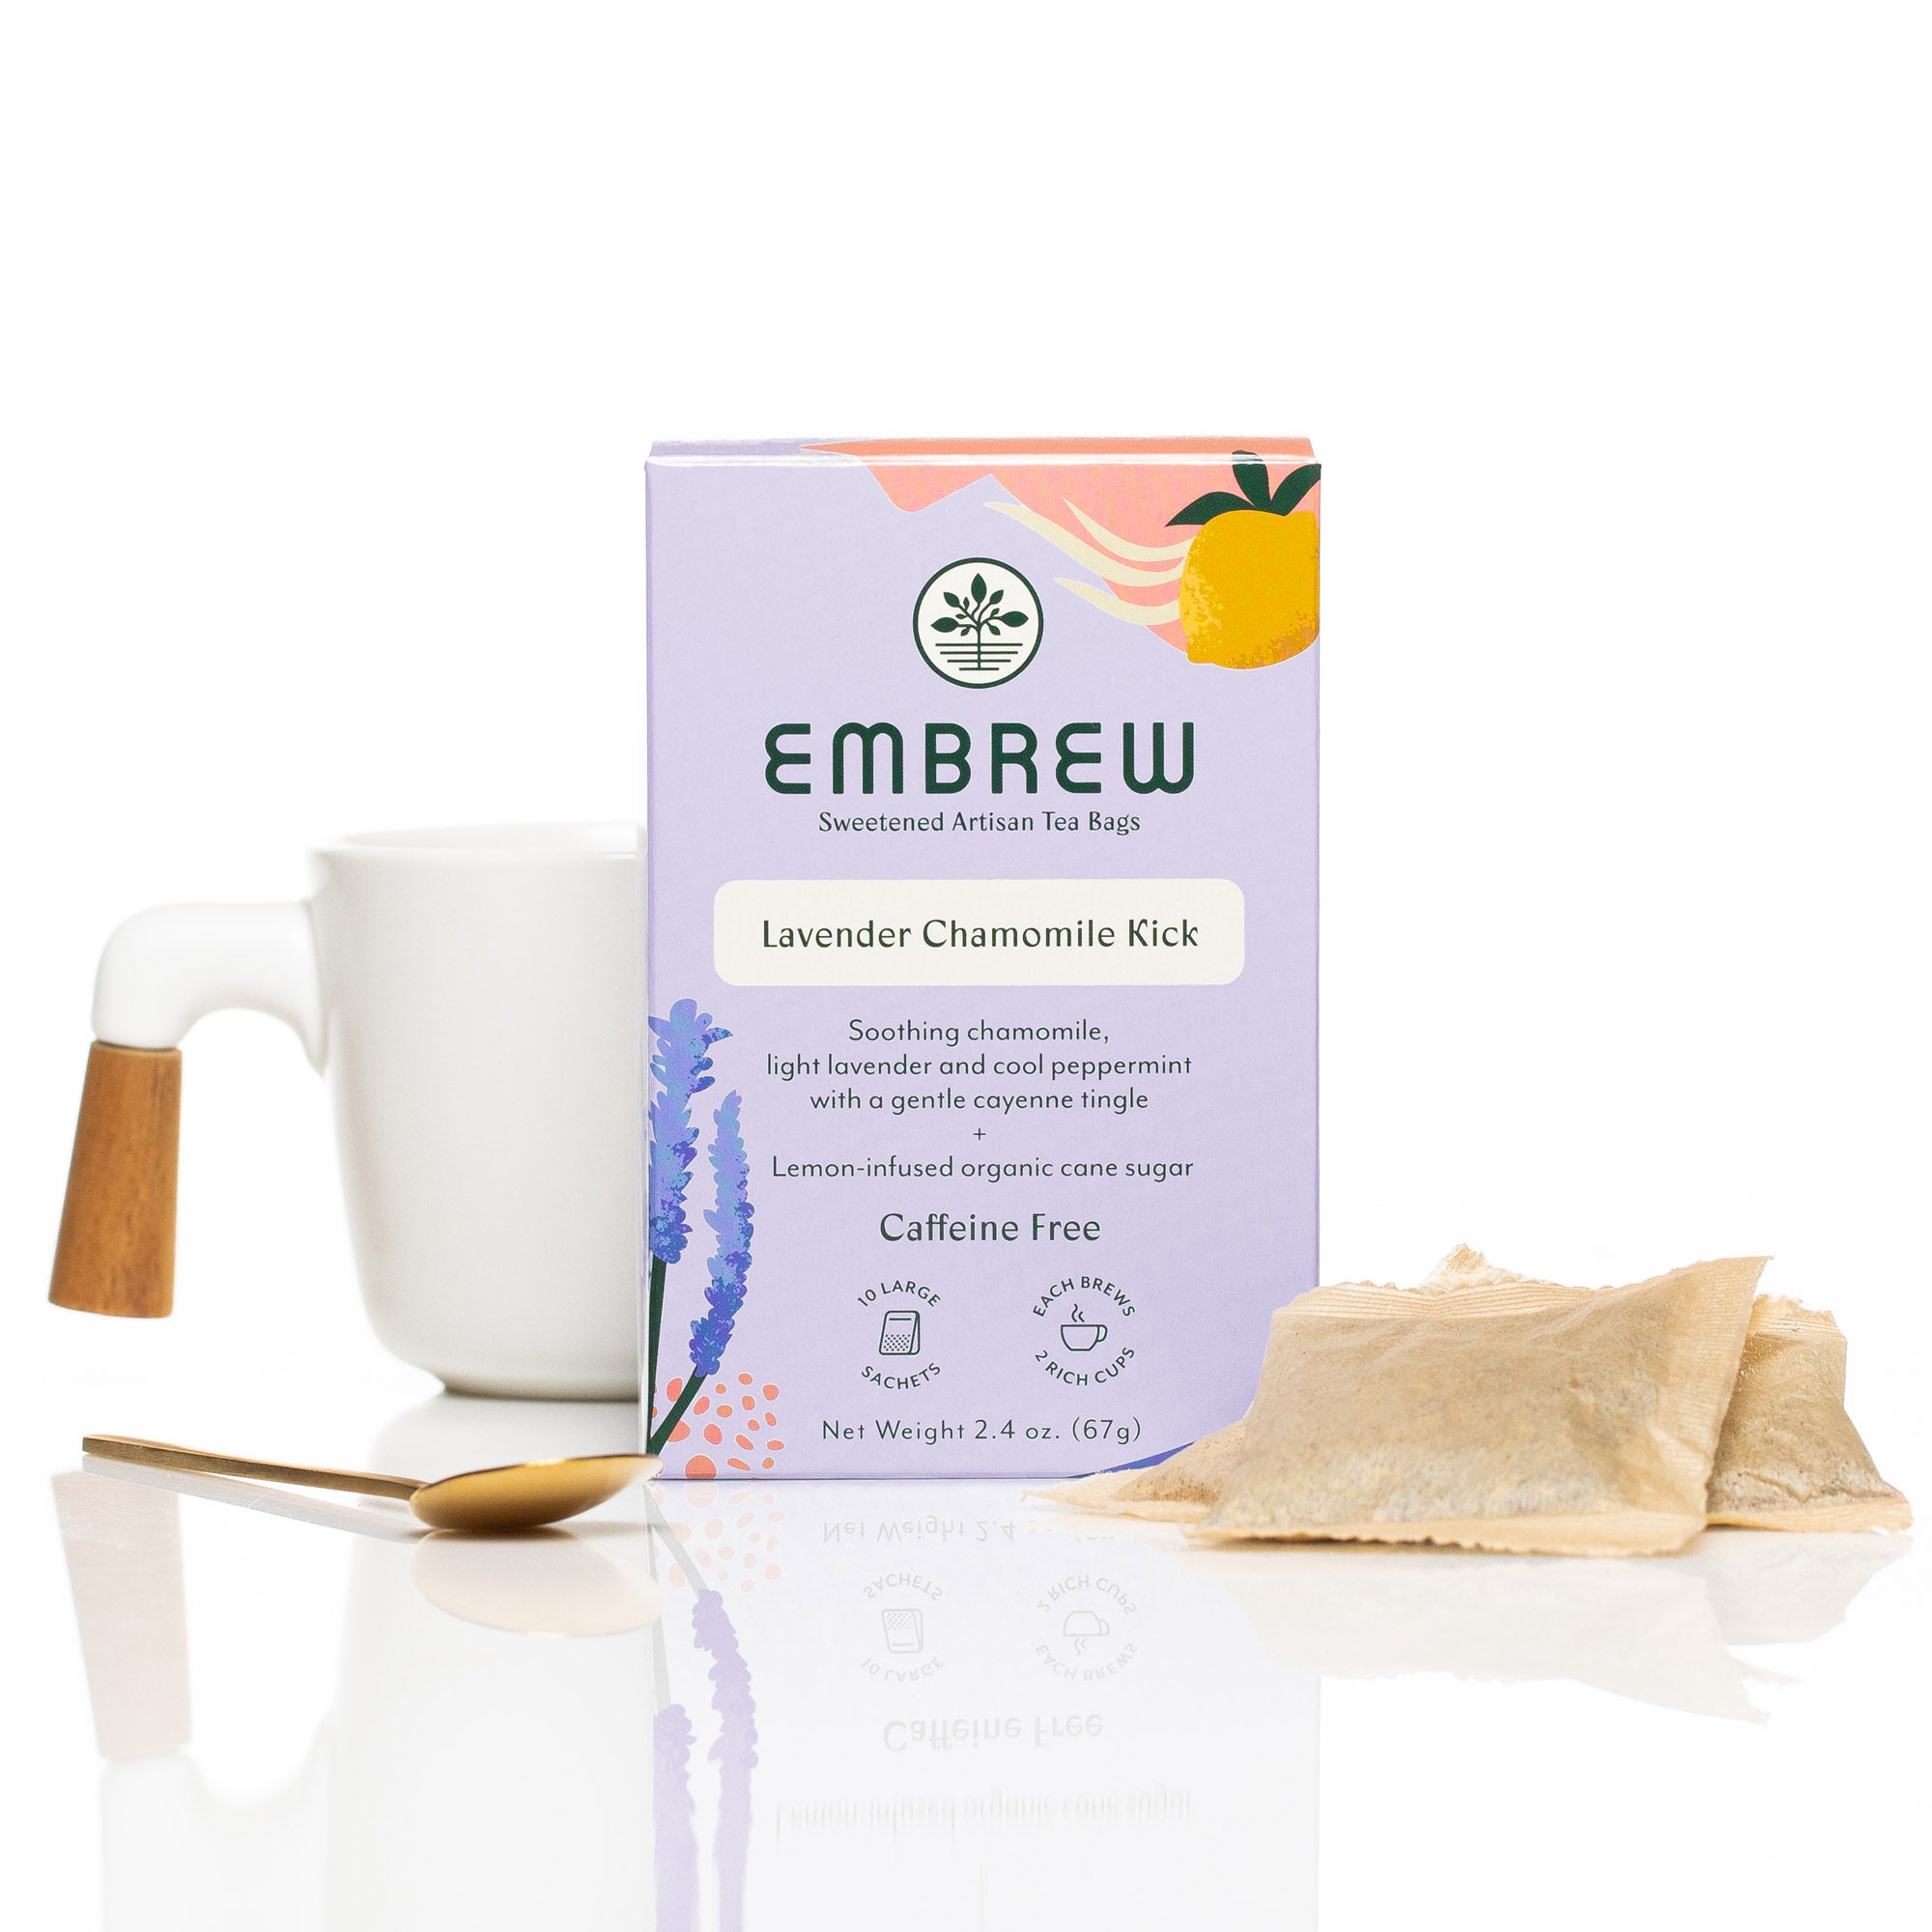 Embrew Tea Lavender Chamomile Kick Sweetened Tea Bags